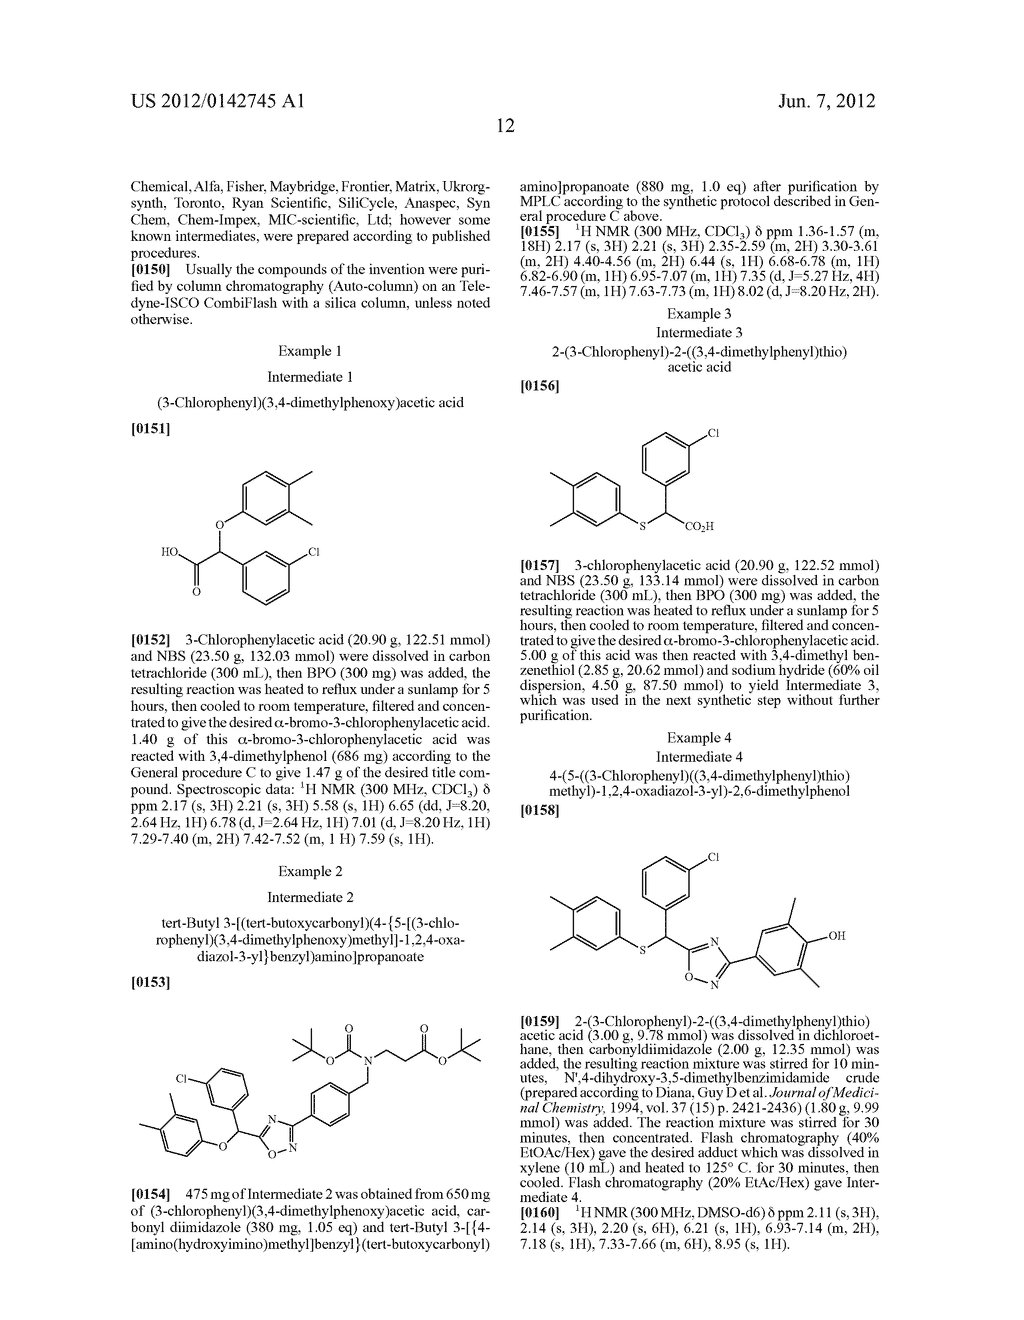 NOVEL PHENYL OXADIAZOLE DERIVATIVES AS SPHINGOSINE 1-PHOSPHATE (S1P)     RECEPTOR MODULATORS - diagram, schematic, and image 13